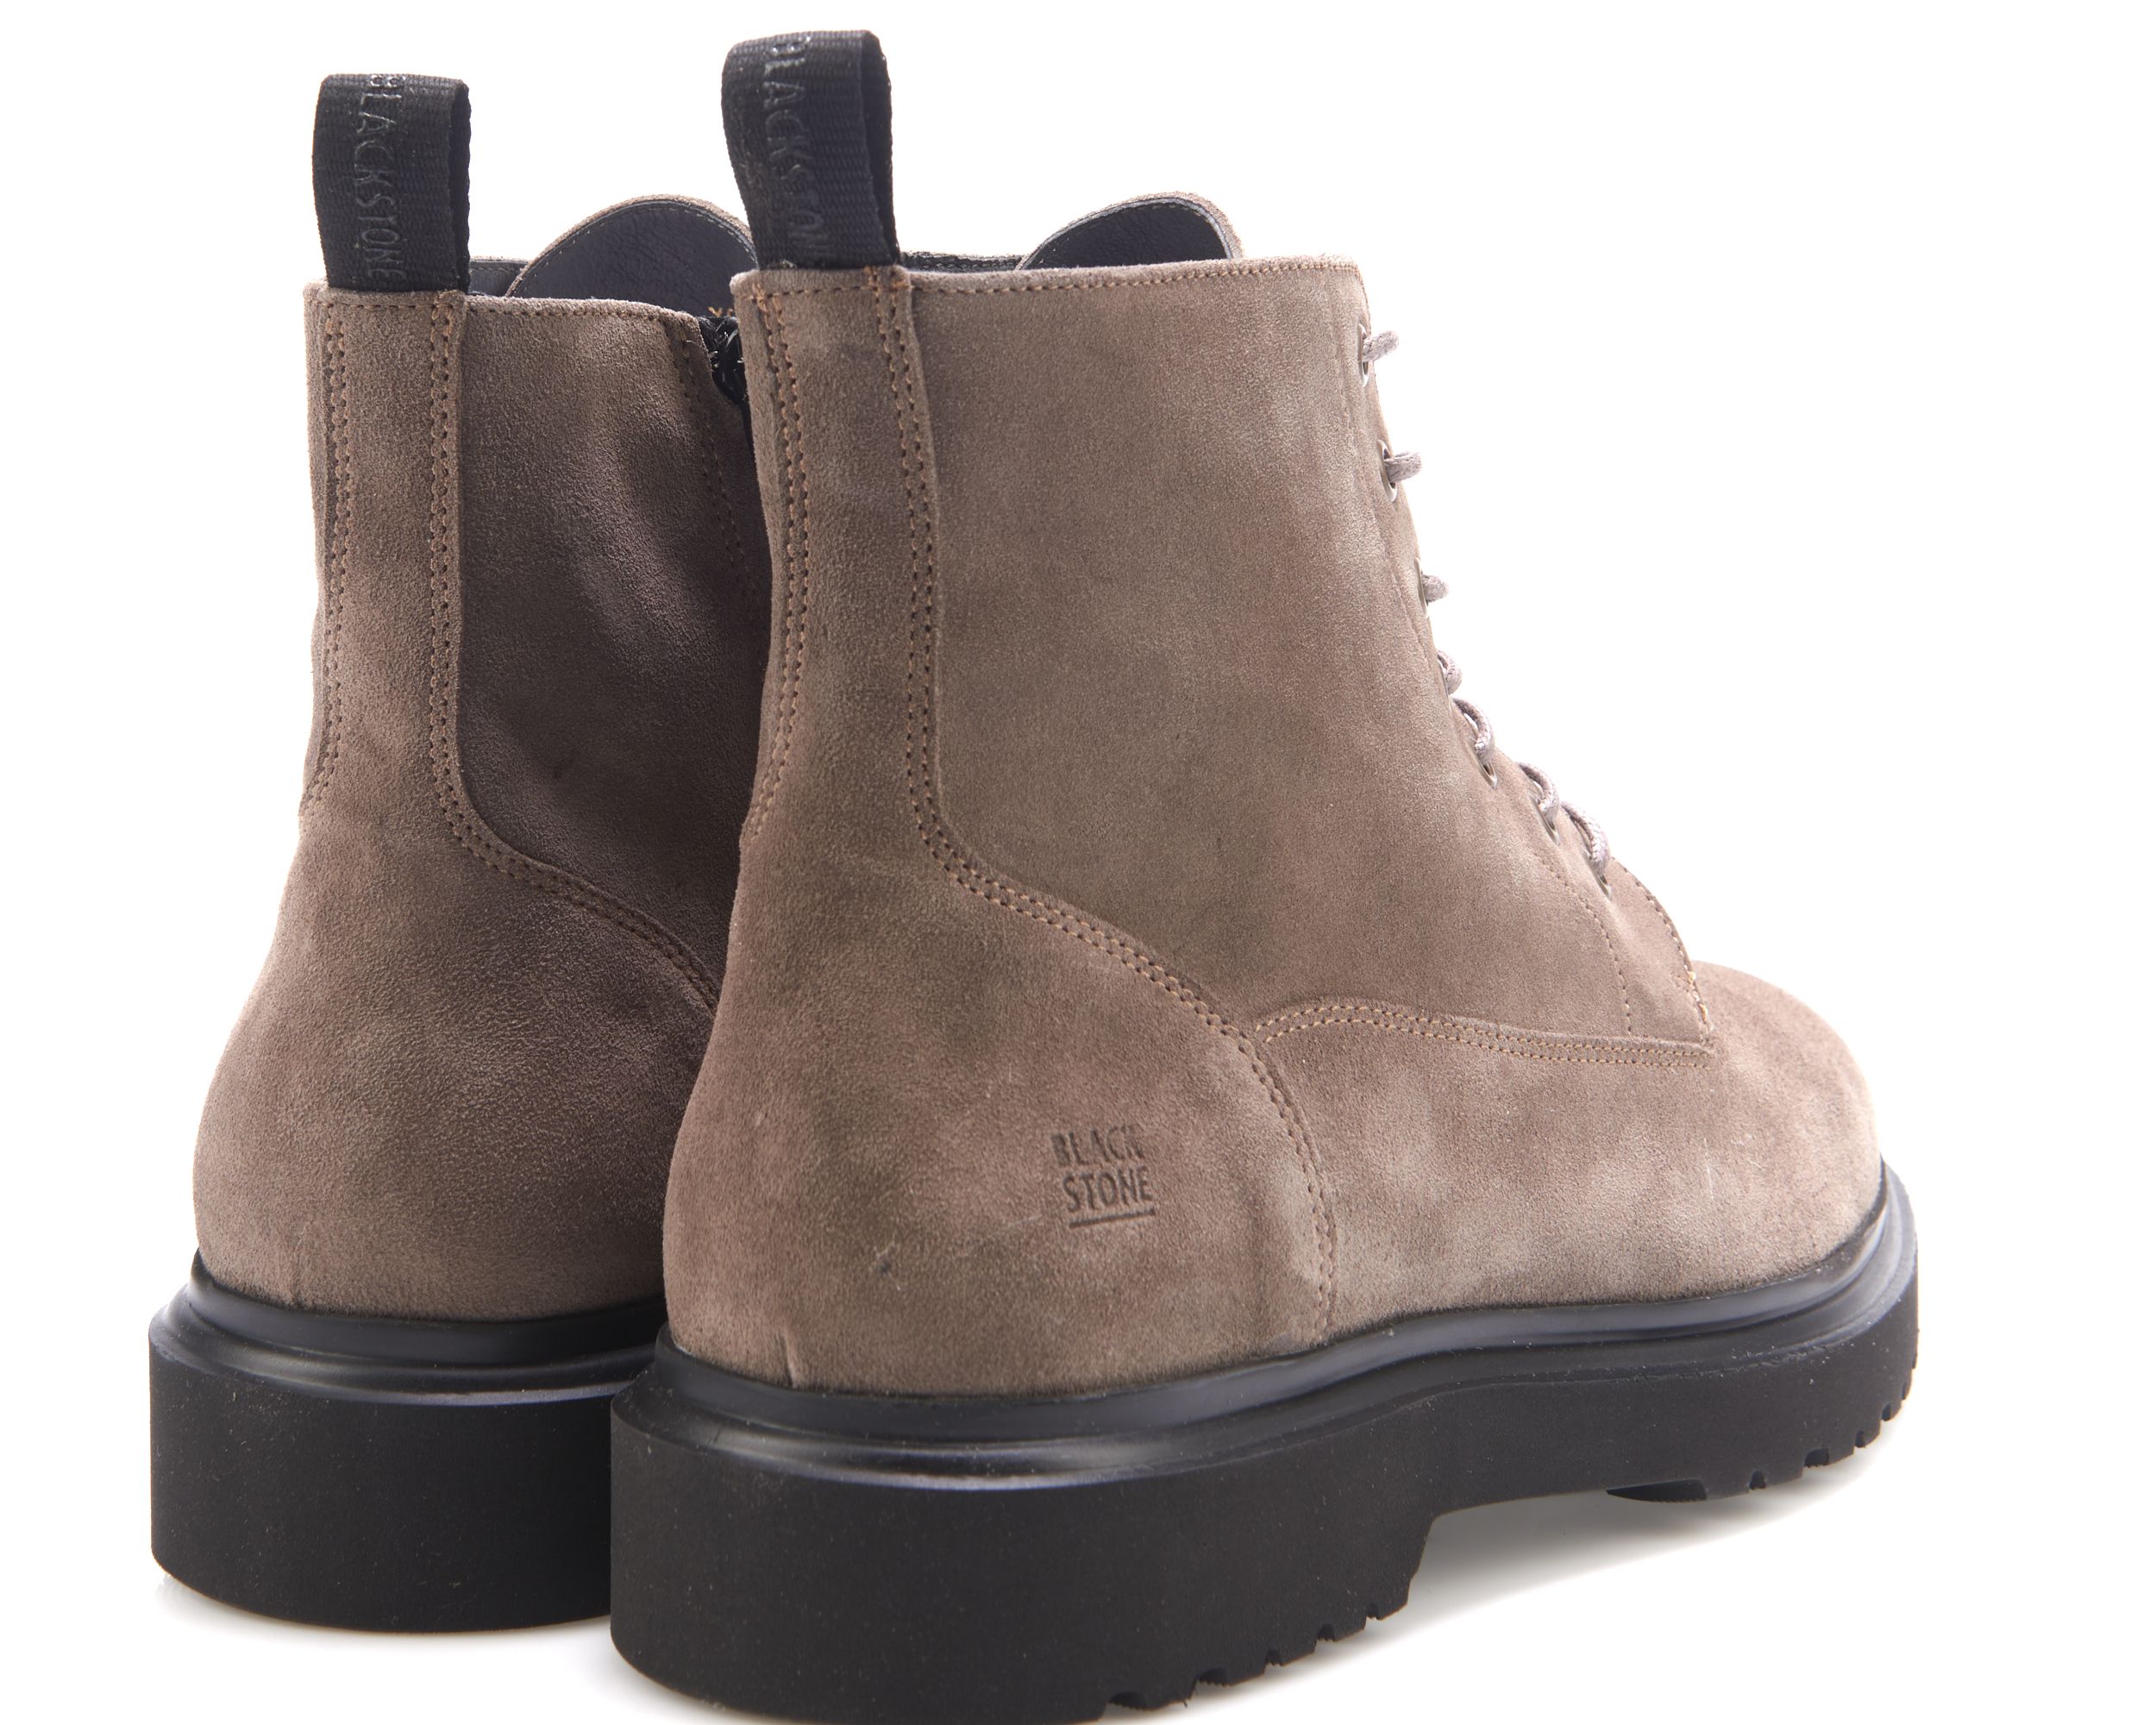 Blackstone Boots Khaki 079404-002-41